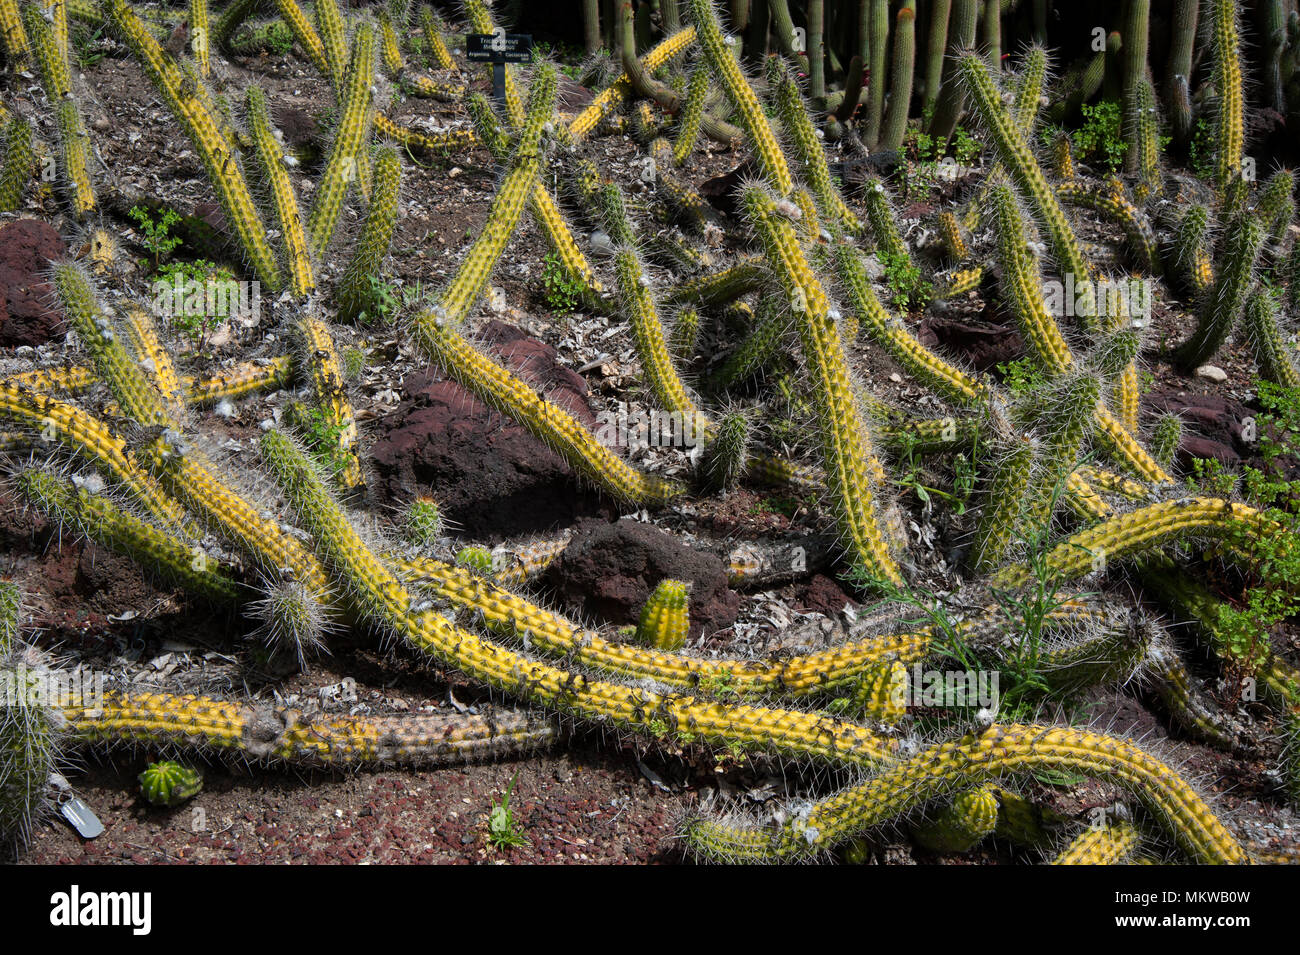 Cactus Garden display at the Huntington Gardens in Pasadena, CA Stock Photo